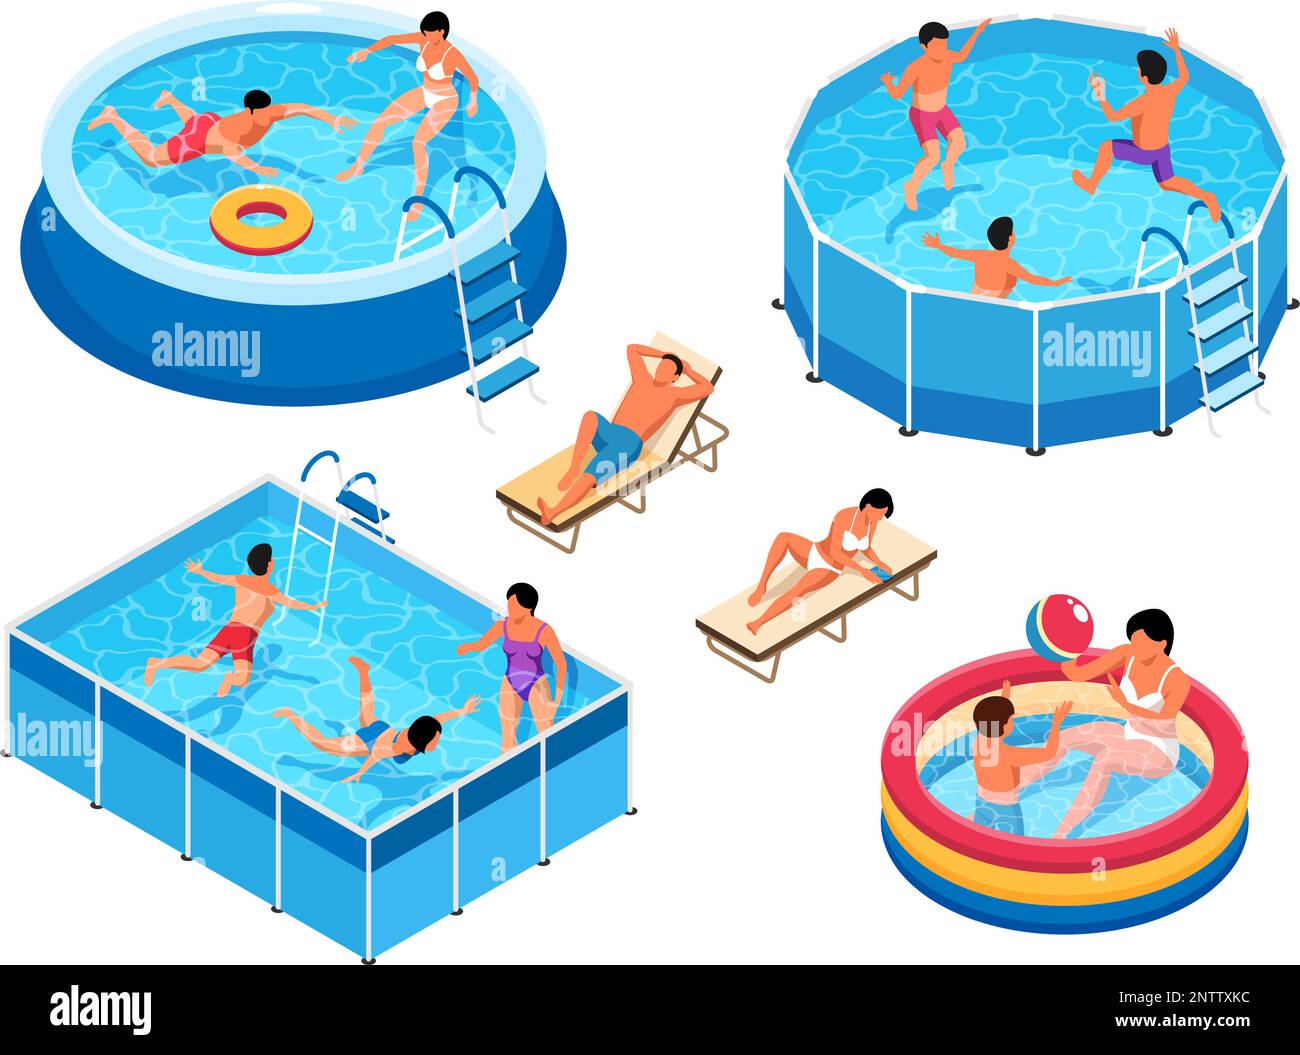 Backyard pool inflatable Stock Vector Images - Alamy